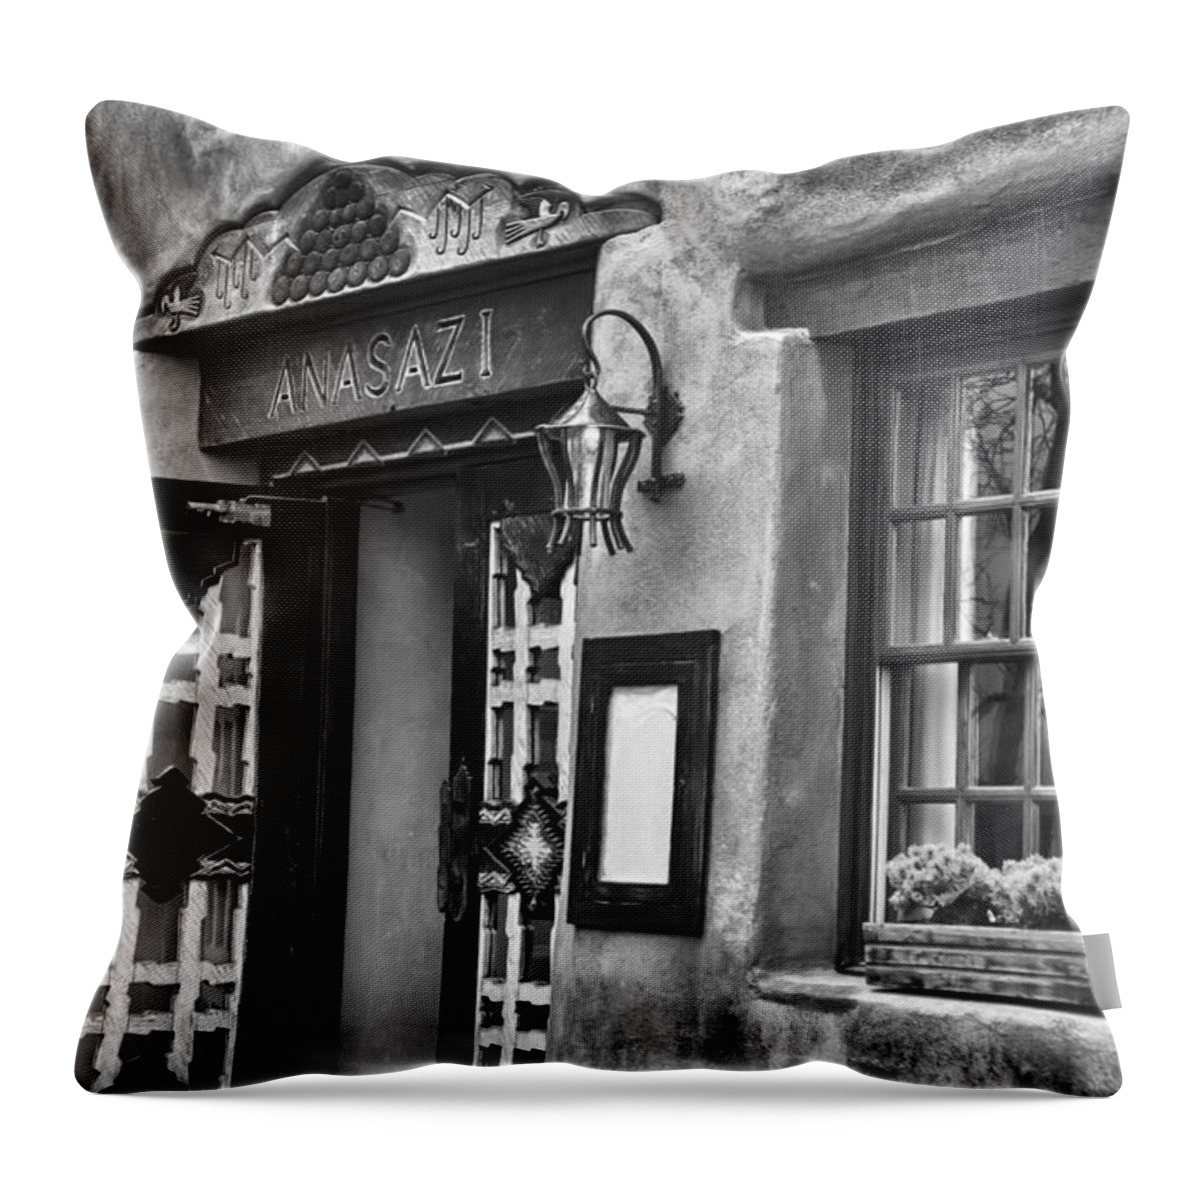 Anasazi Inn Throw Pillow featuring the photograph Anasazi Inn Restaurant by Ron White